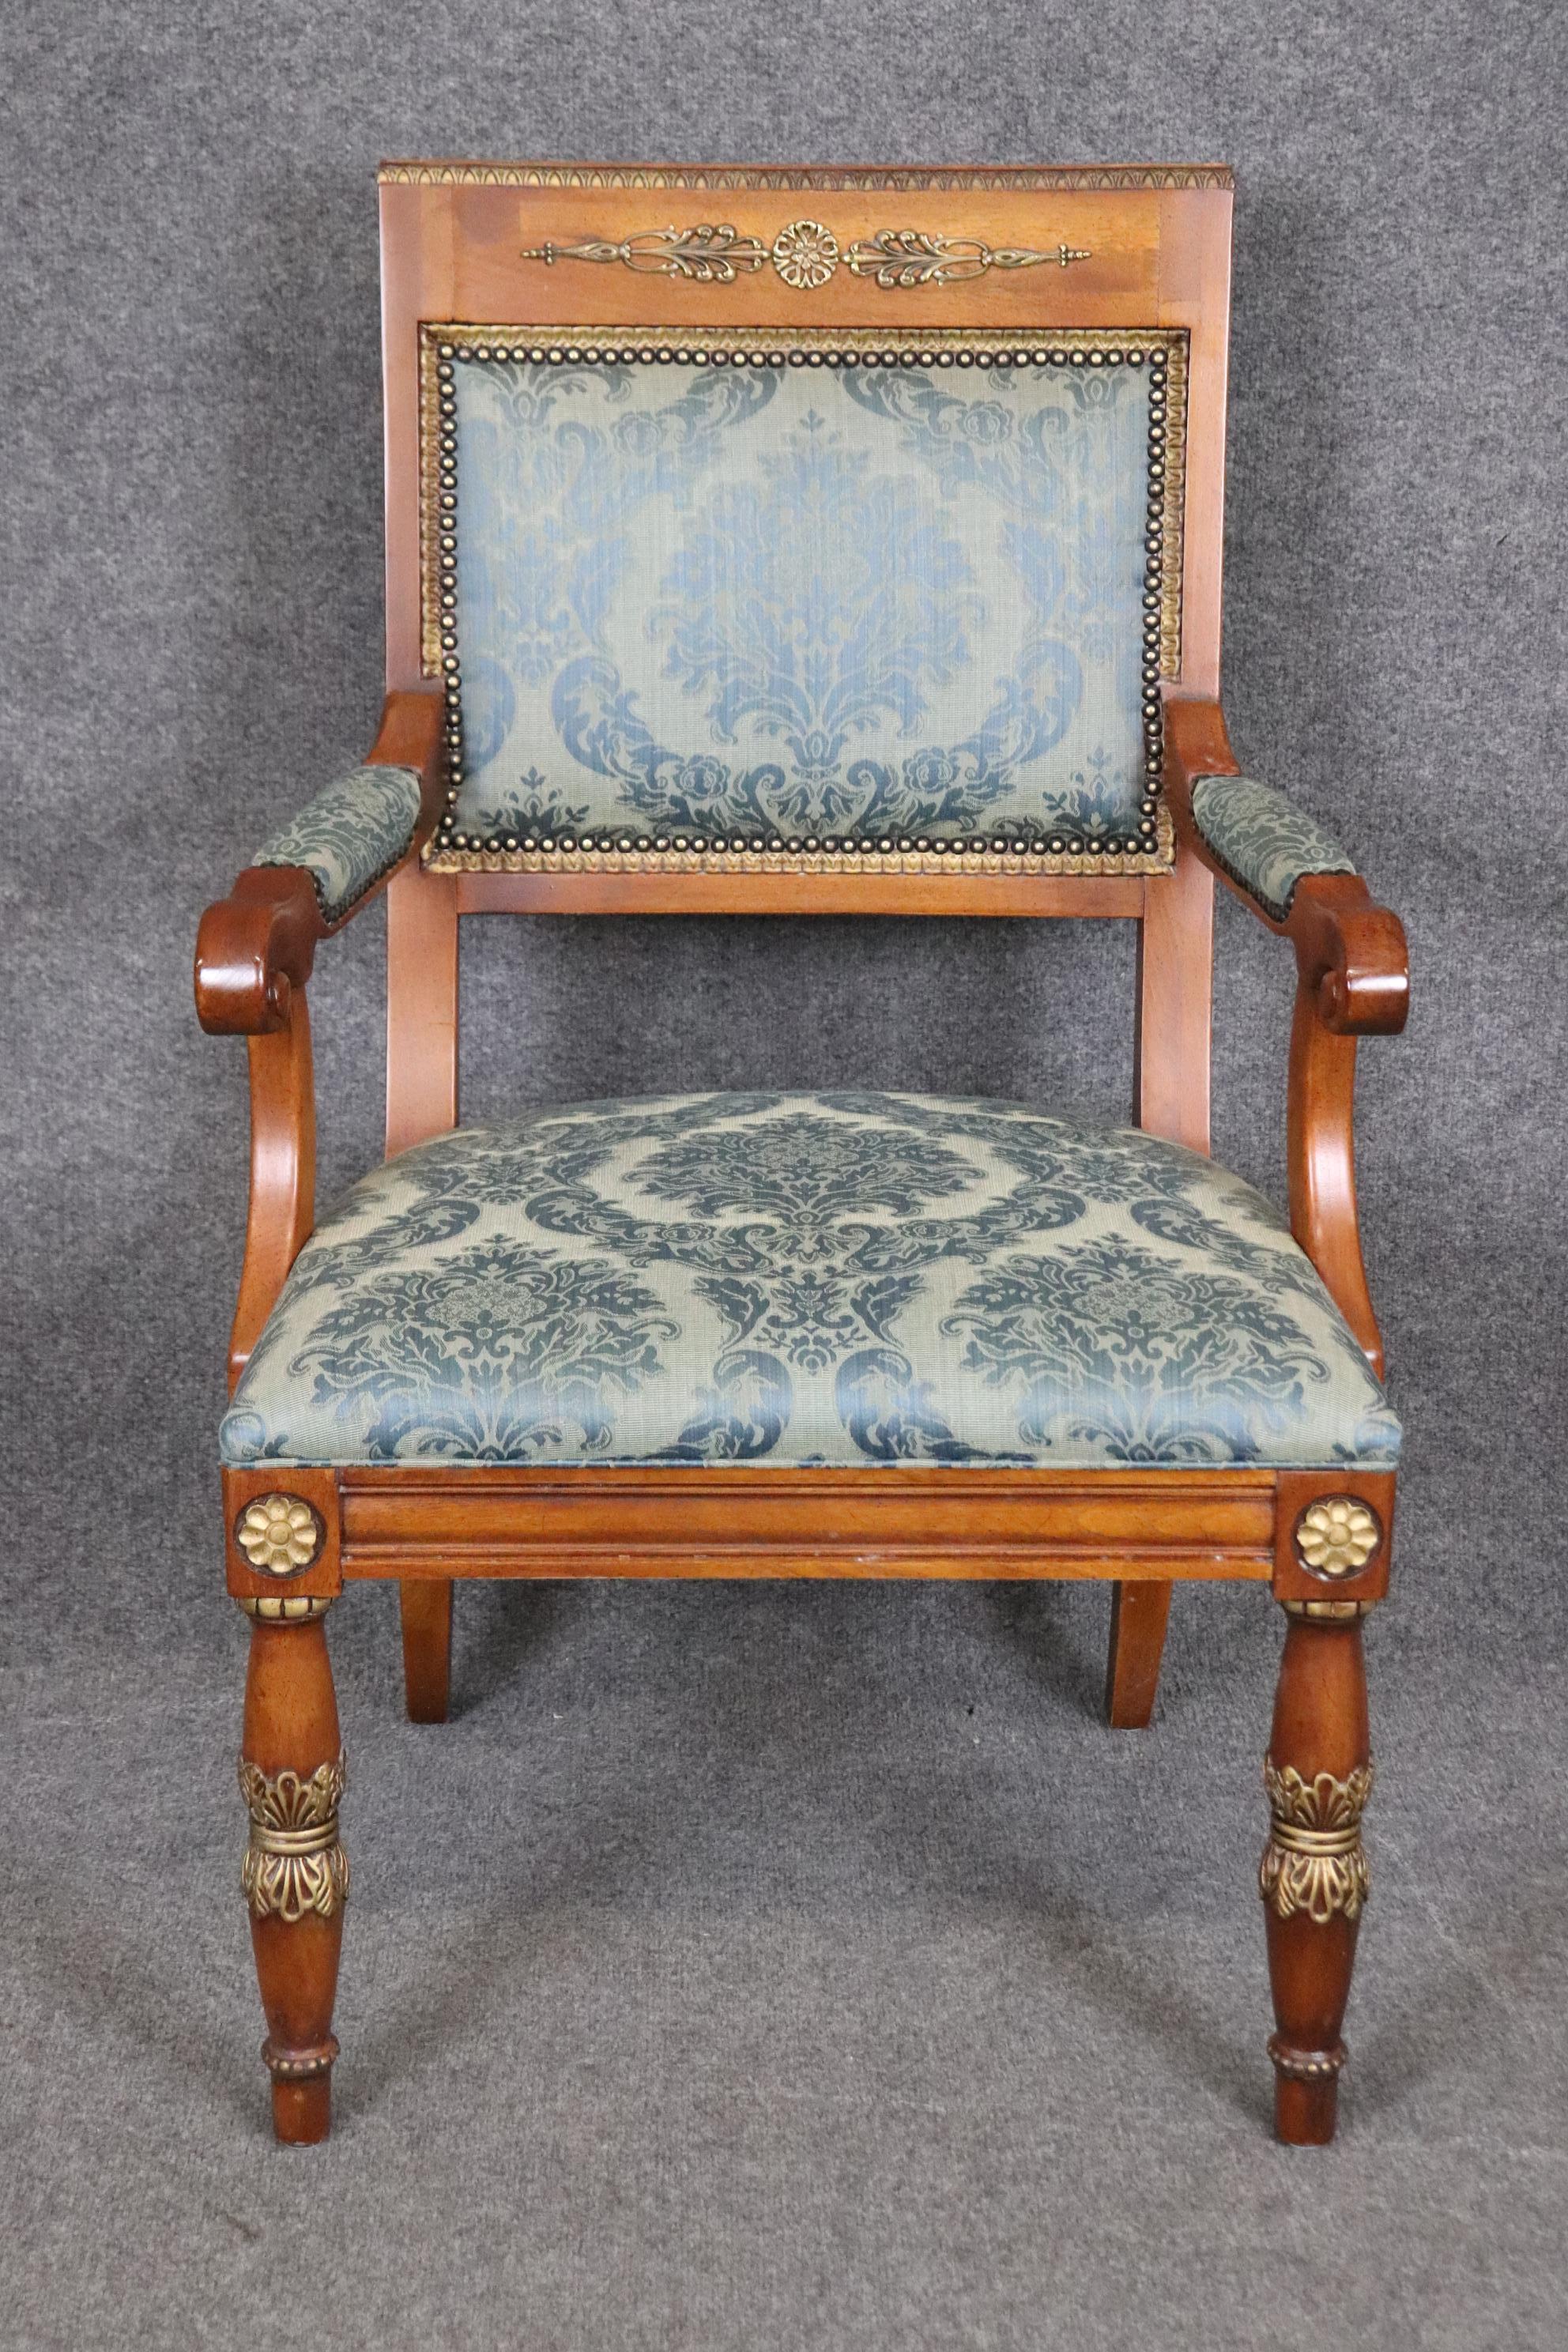 Französischer Empire-Stil Ormolu Henredon Classic Sessel oder Thronsessel (Empire Revival) im Angebot